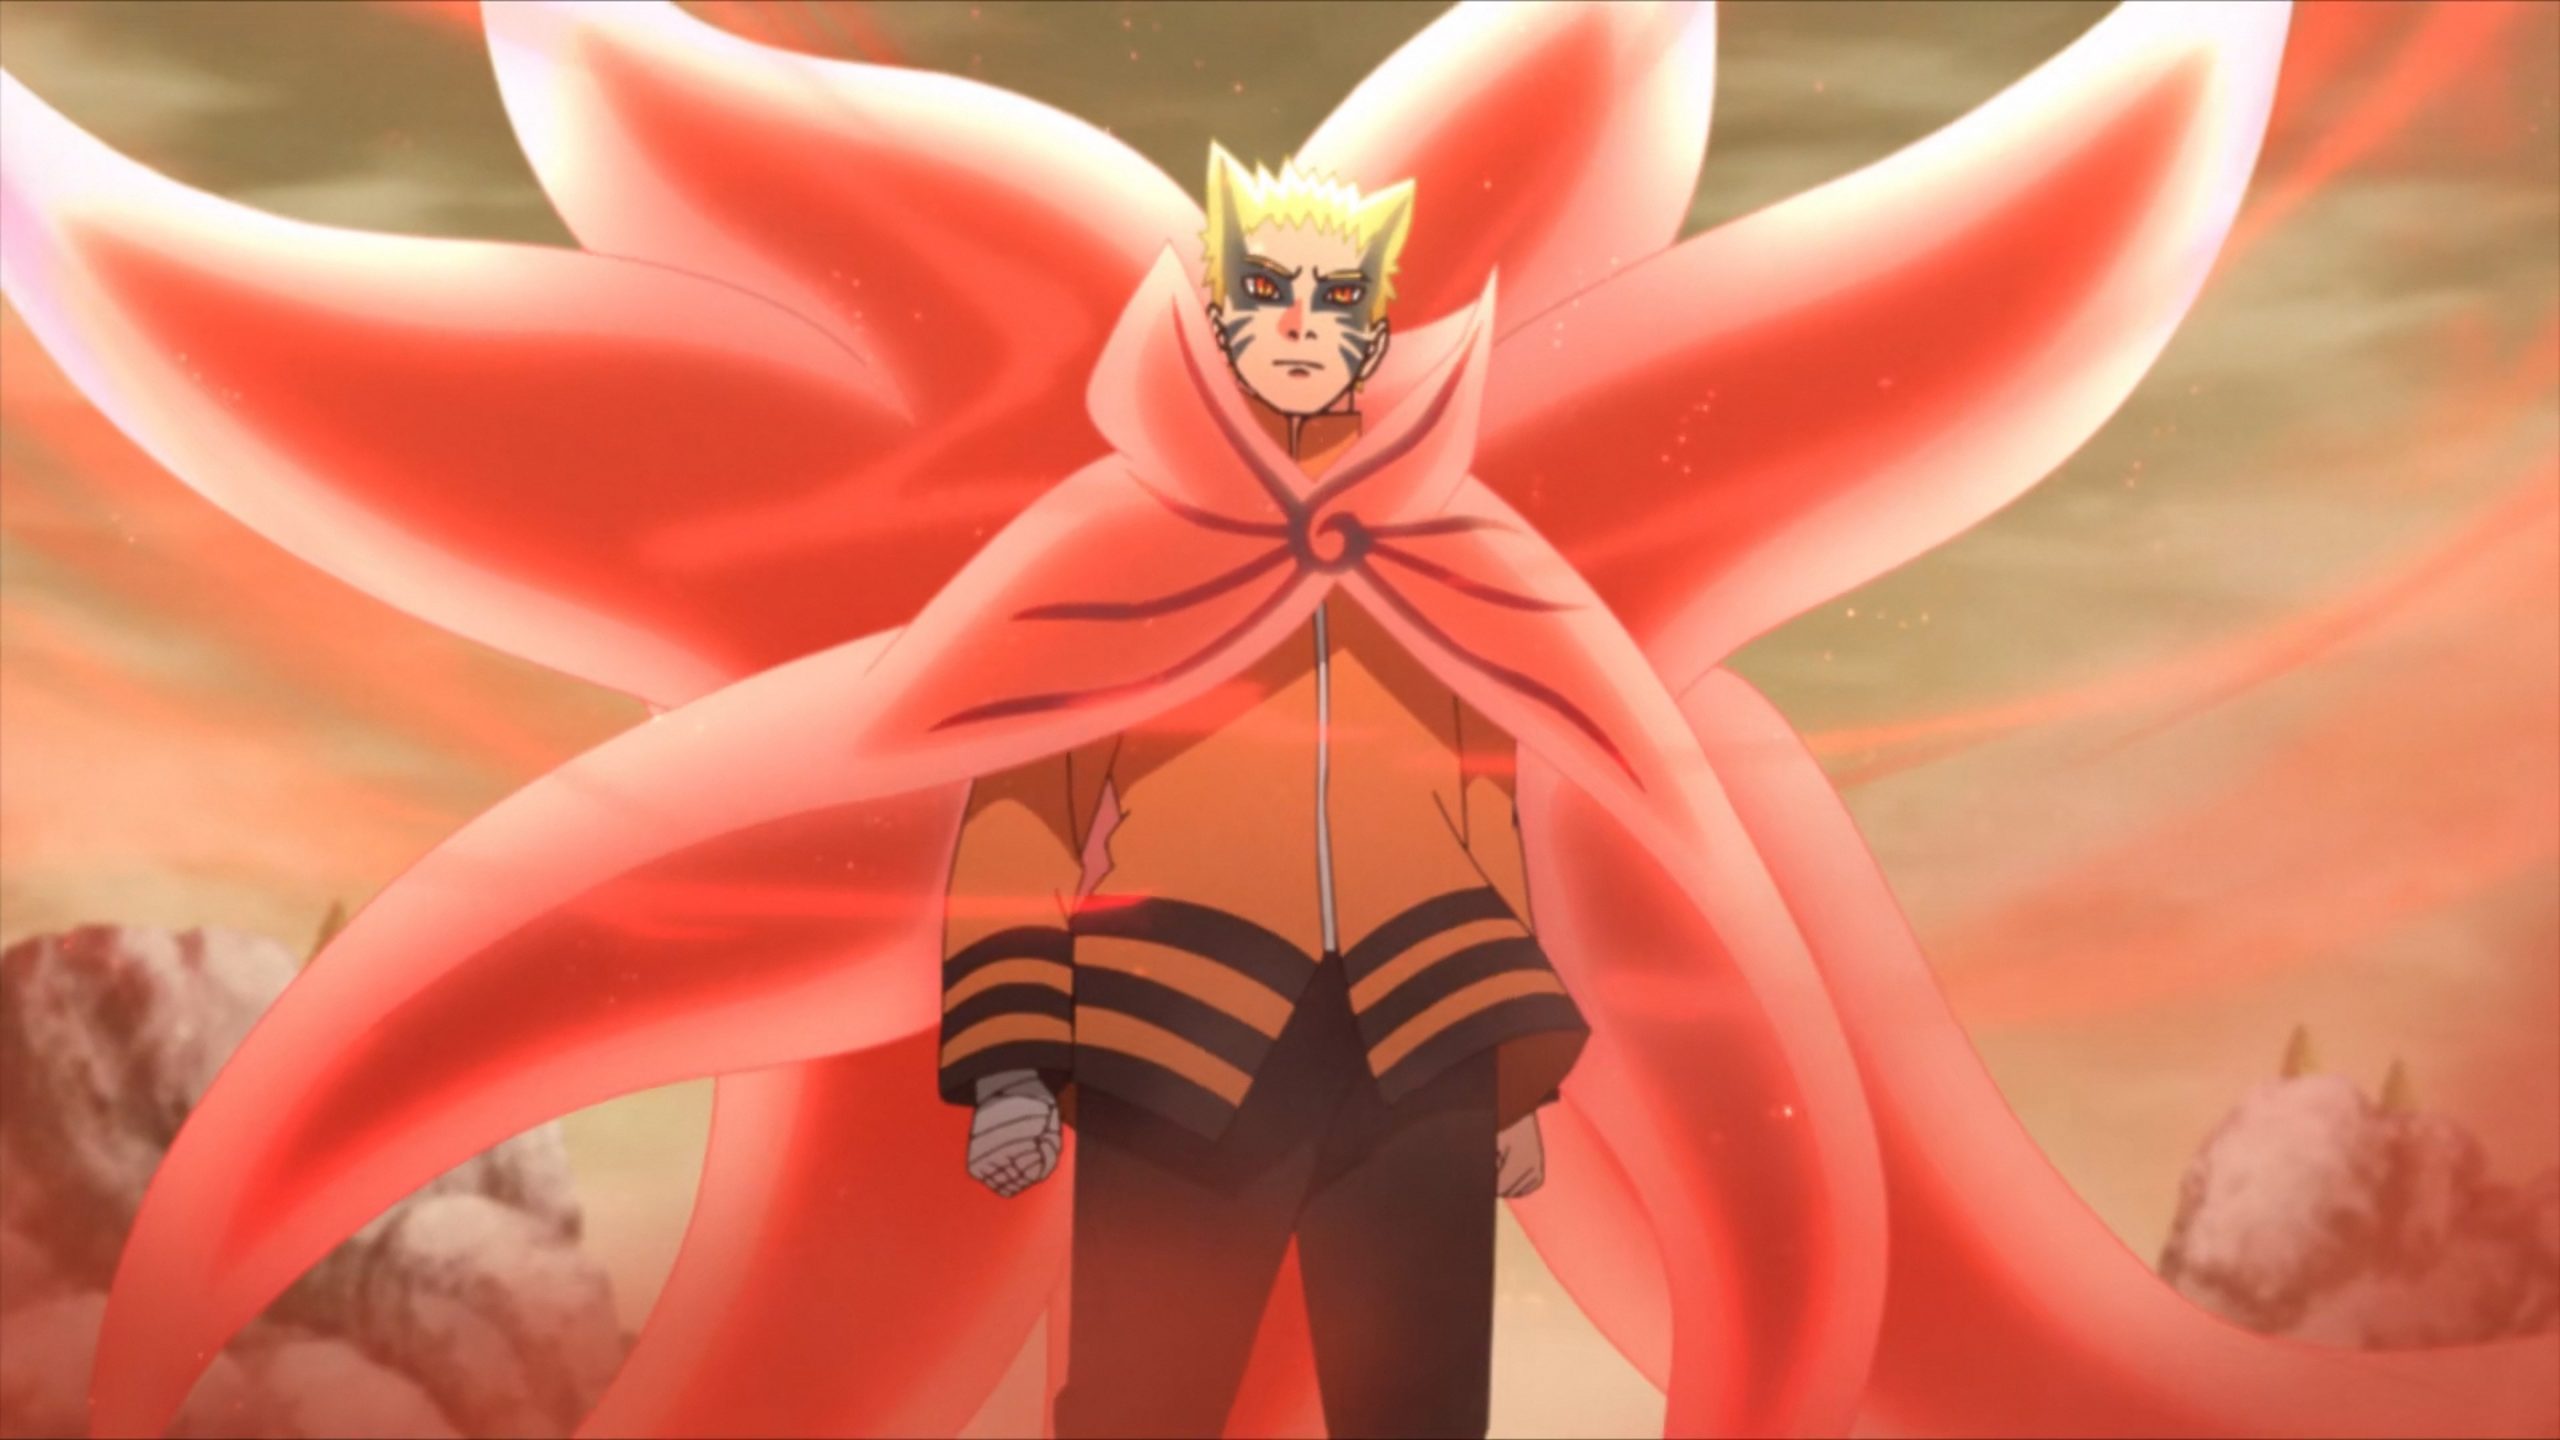 Boruto: Naruto Next Generations: Conheça sinopse, personagens e trailer